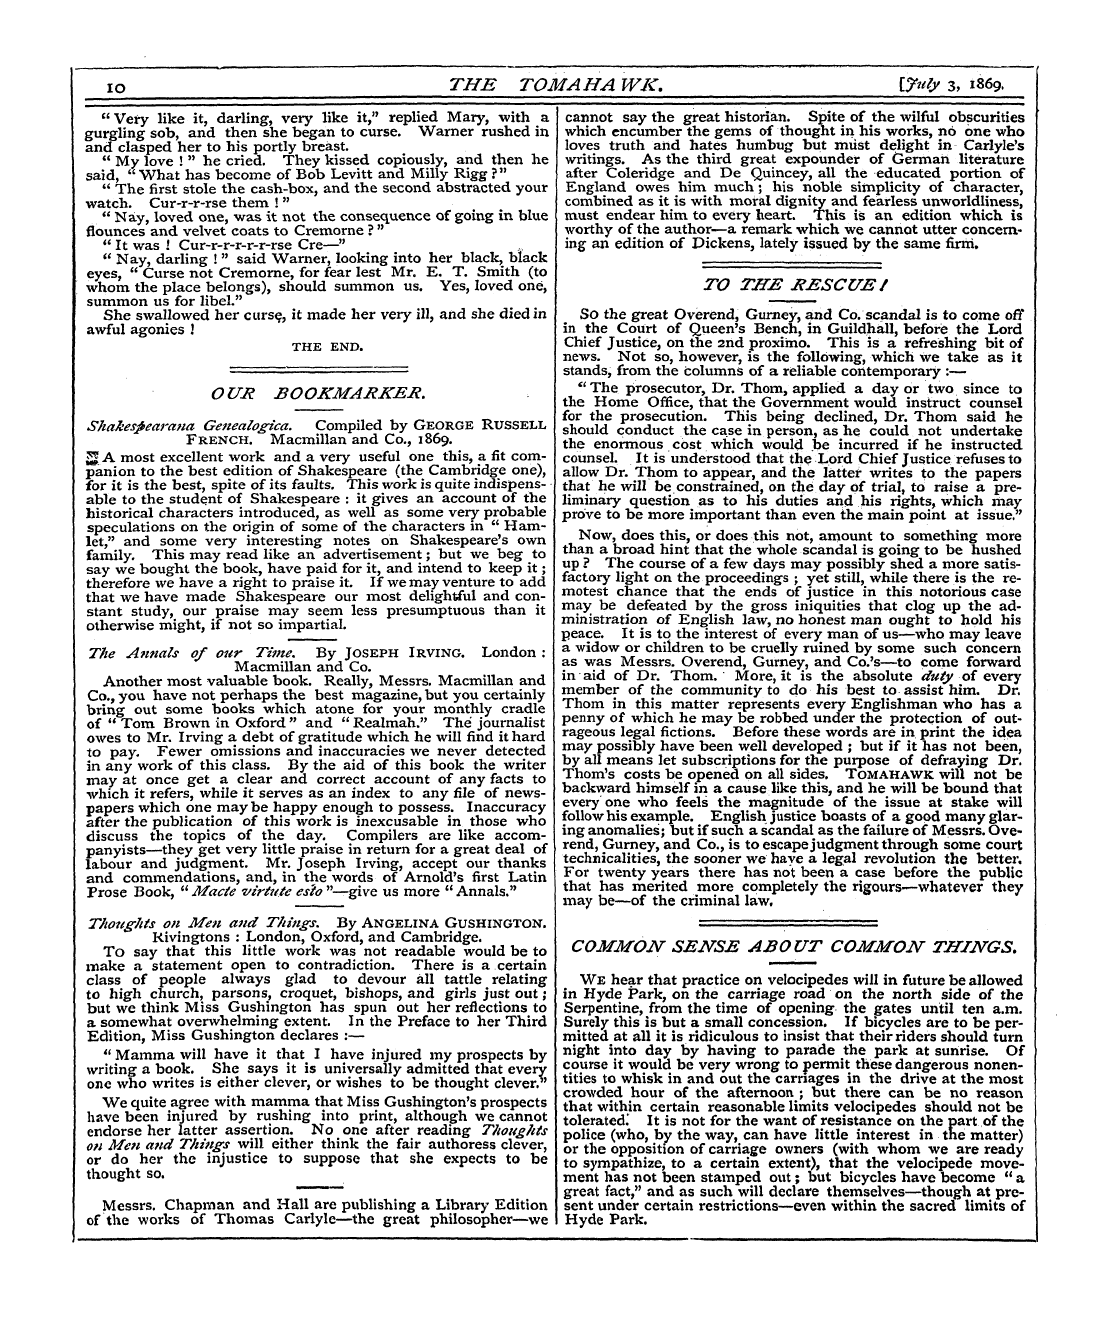 Tomahawk (1867-1870): jS F Y, 1st edition - To Tjtjs Rescue/